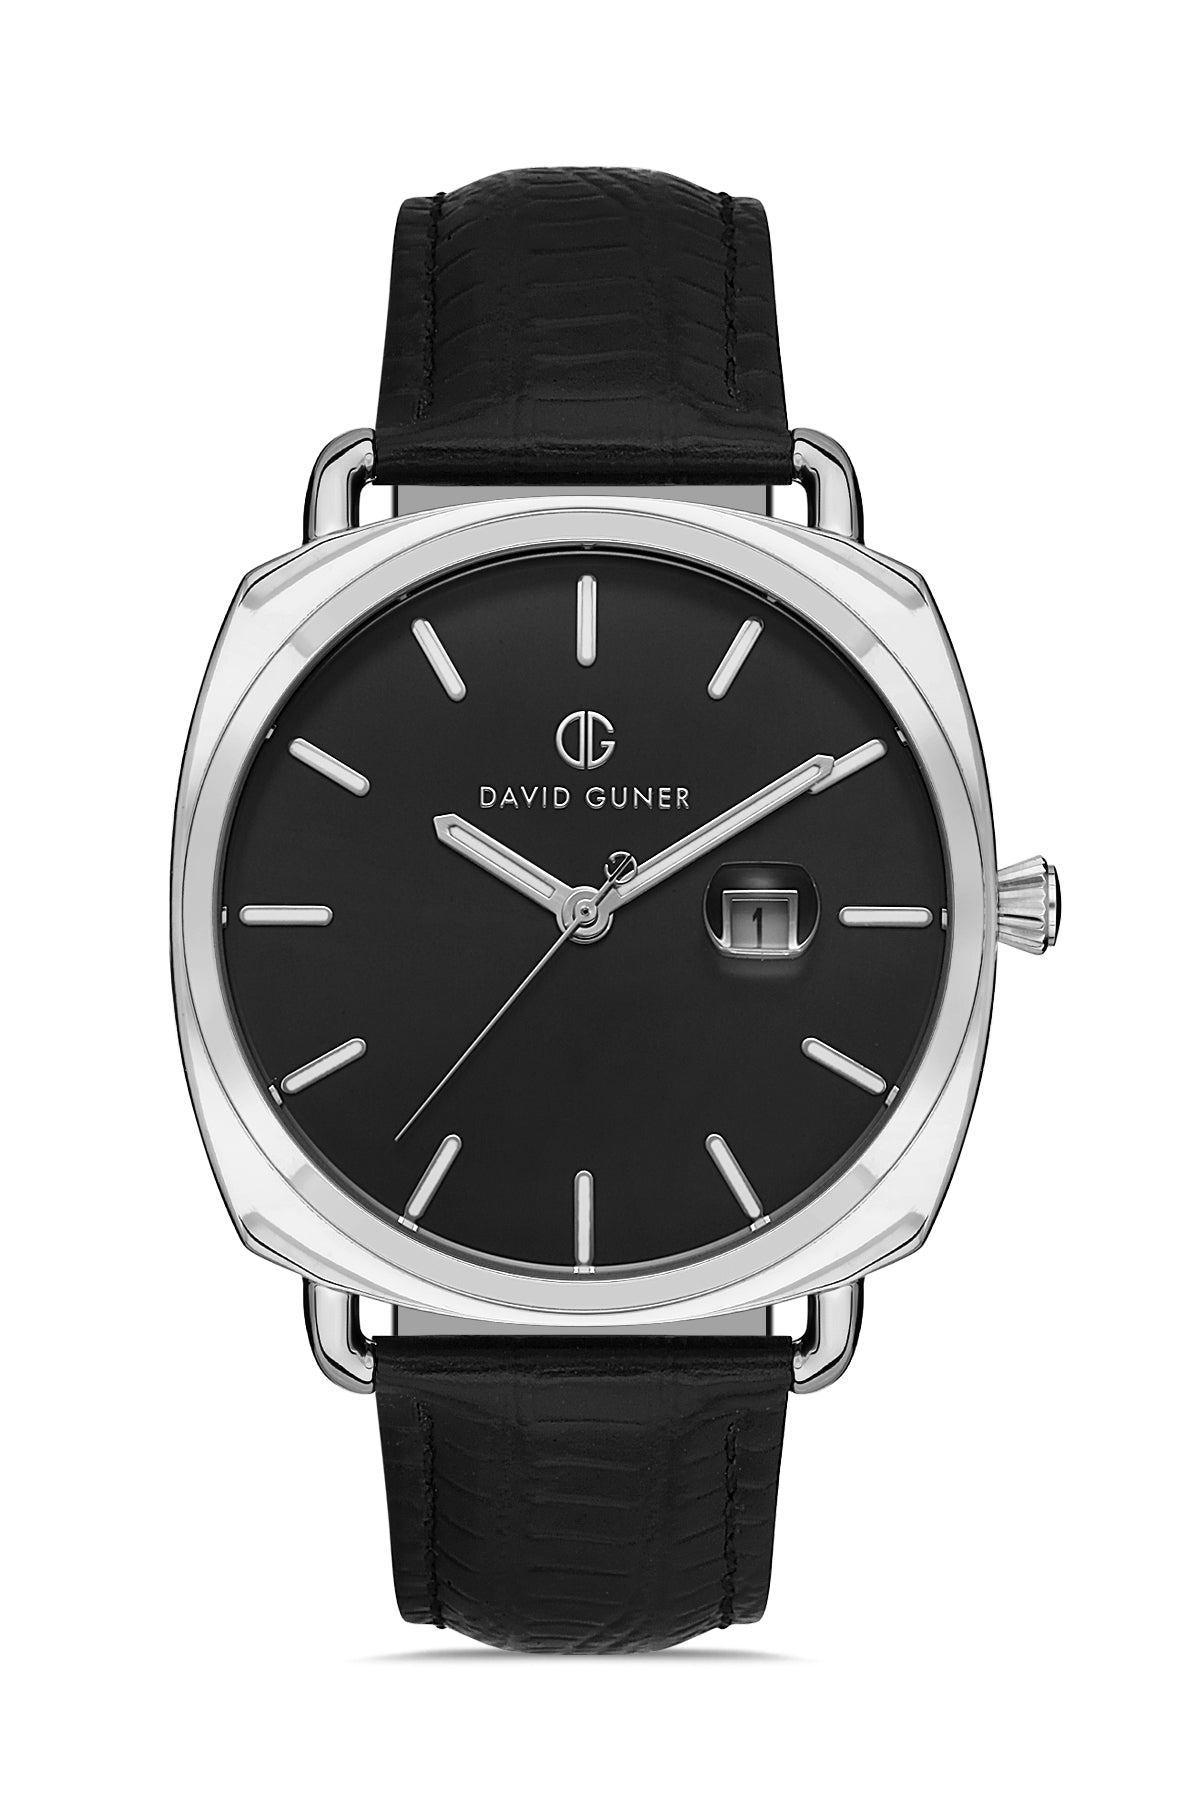 DAVID GUNER Black Dial Silver Plated Men's Wristwatch